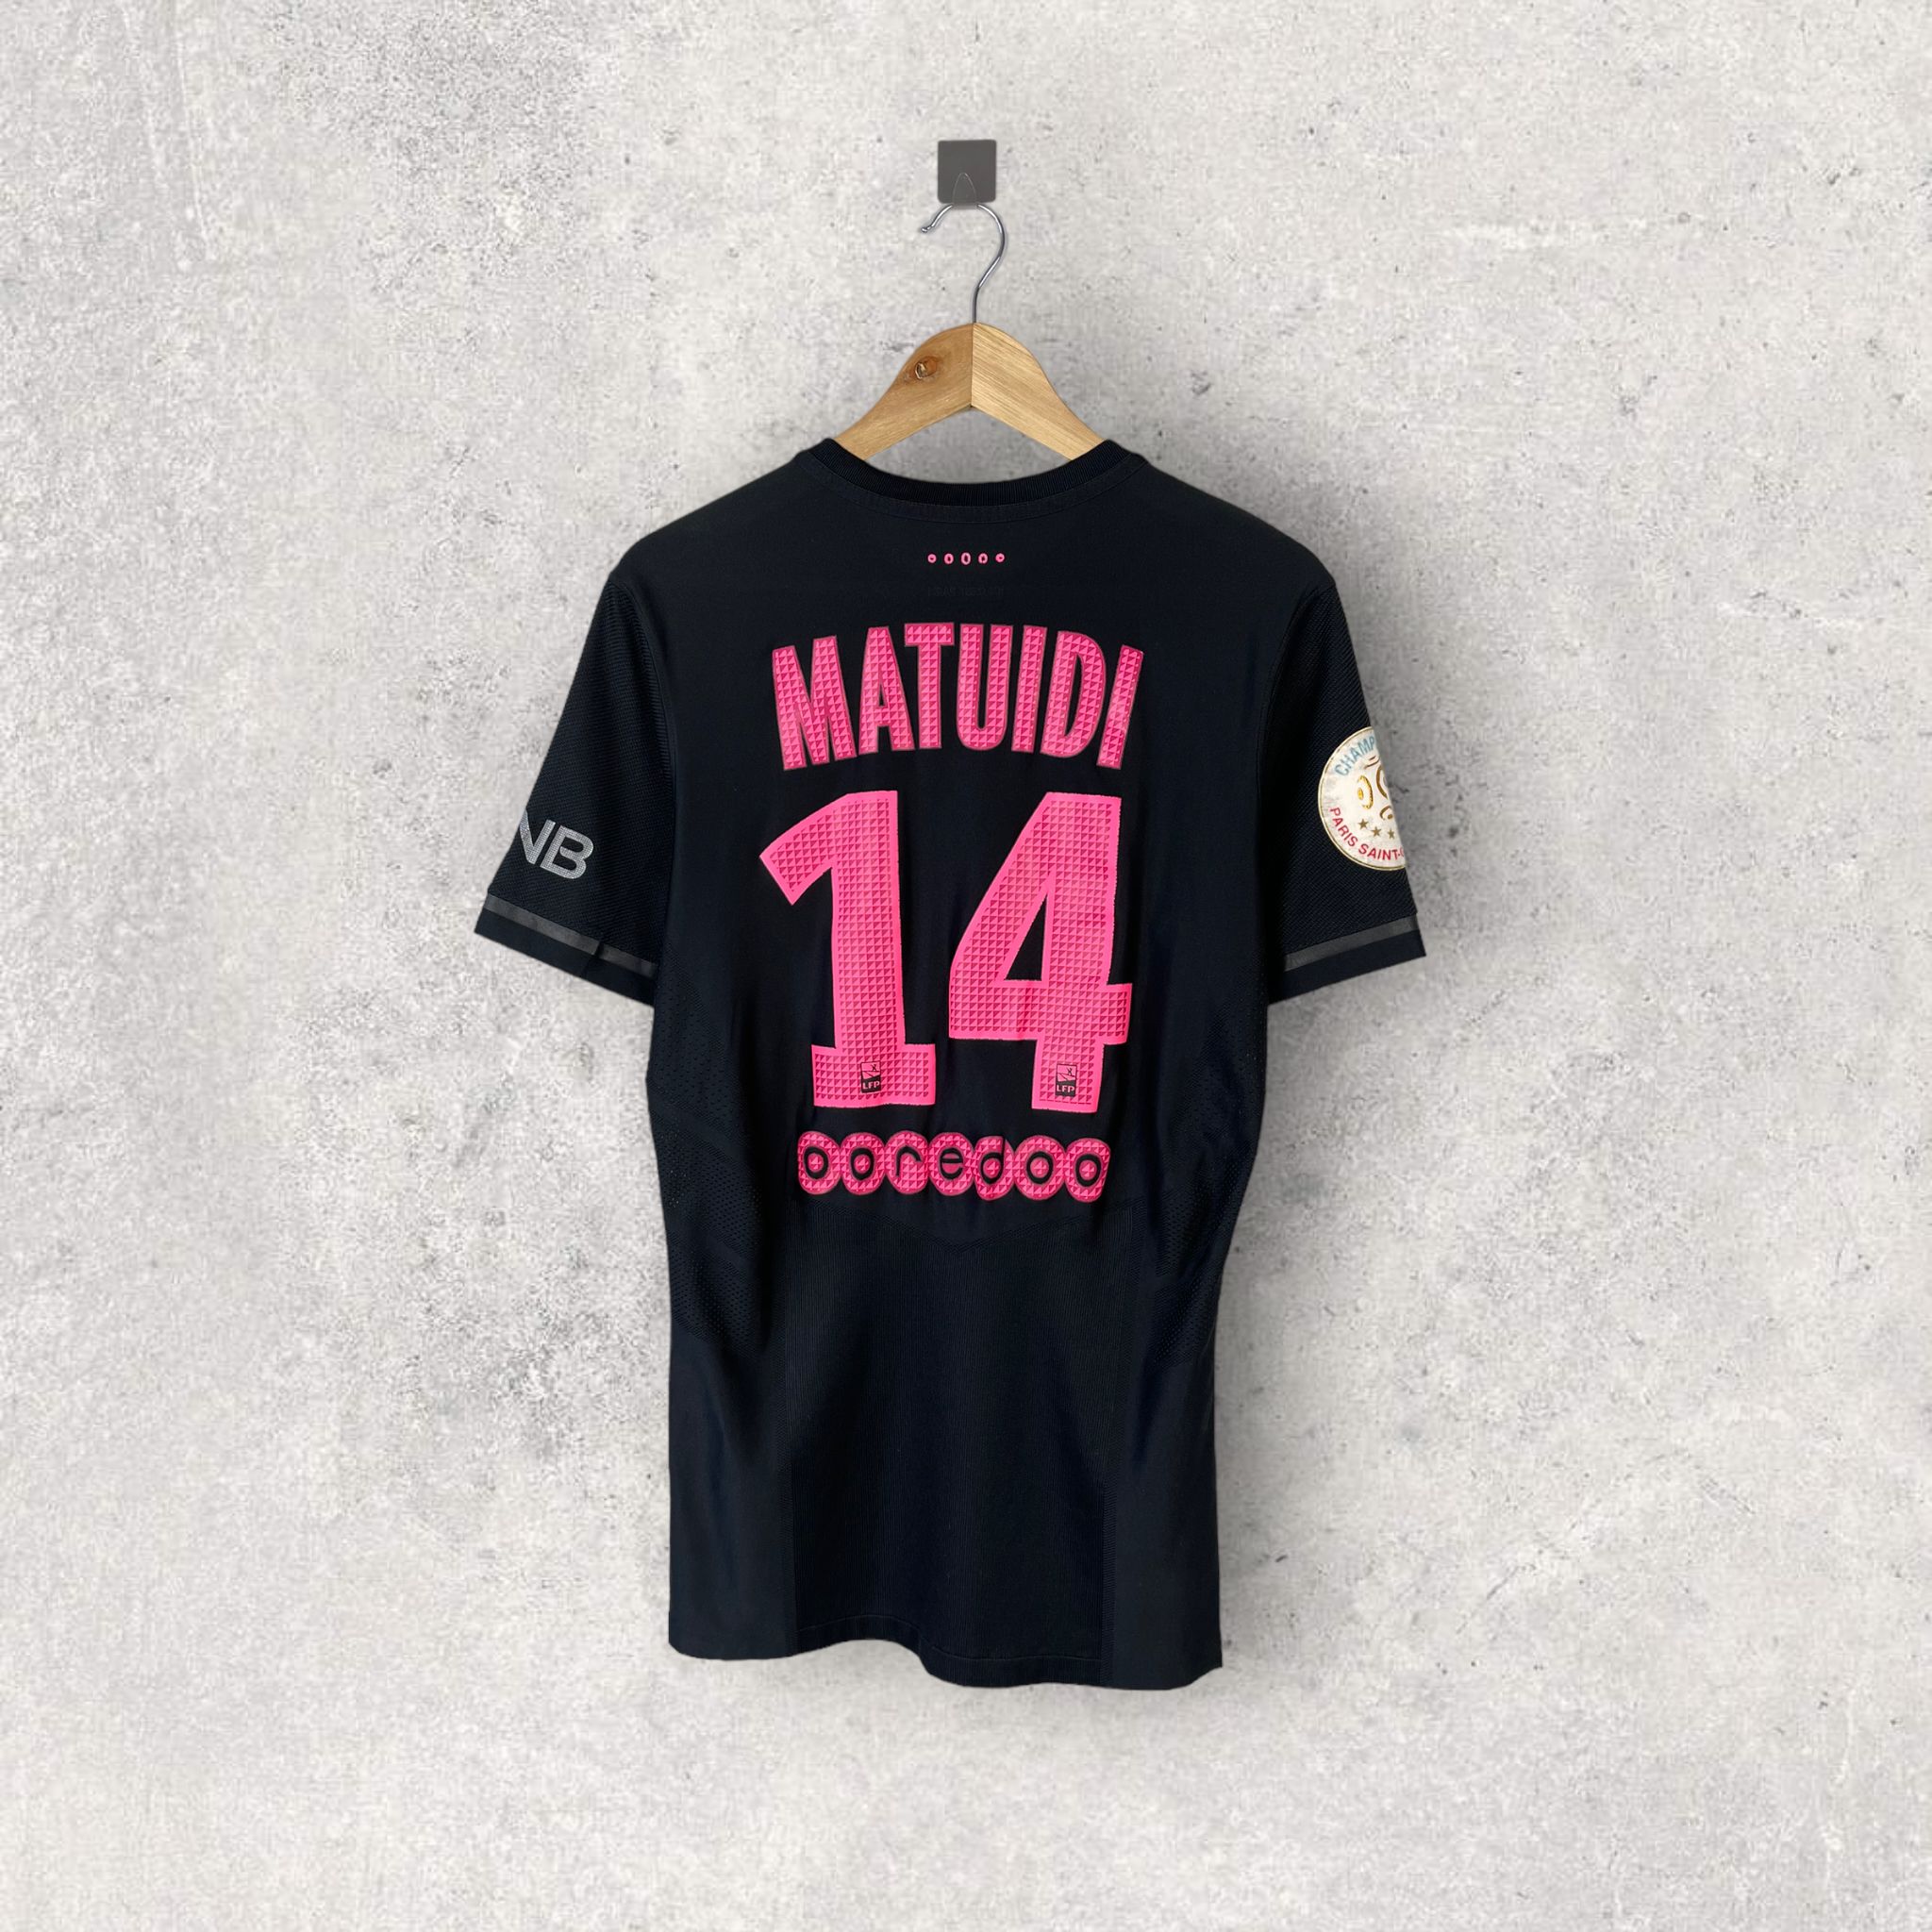 Pre-owned Nike X Soccer Jersey Psg Paris Saint-germain 14 Matuidi Soccer Jersey 2015 In Black